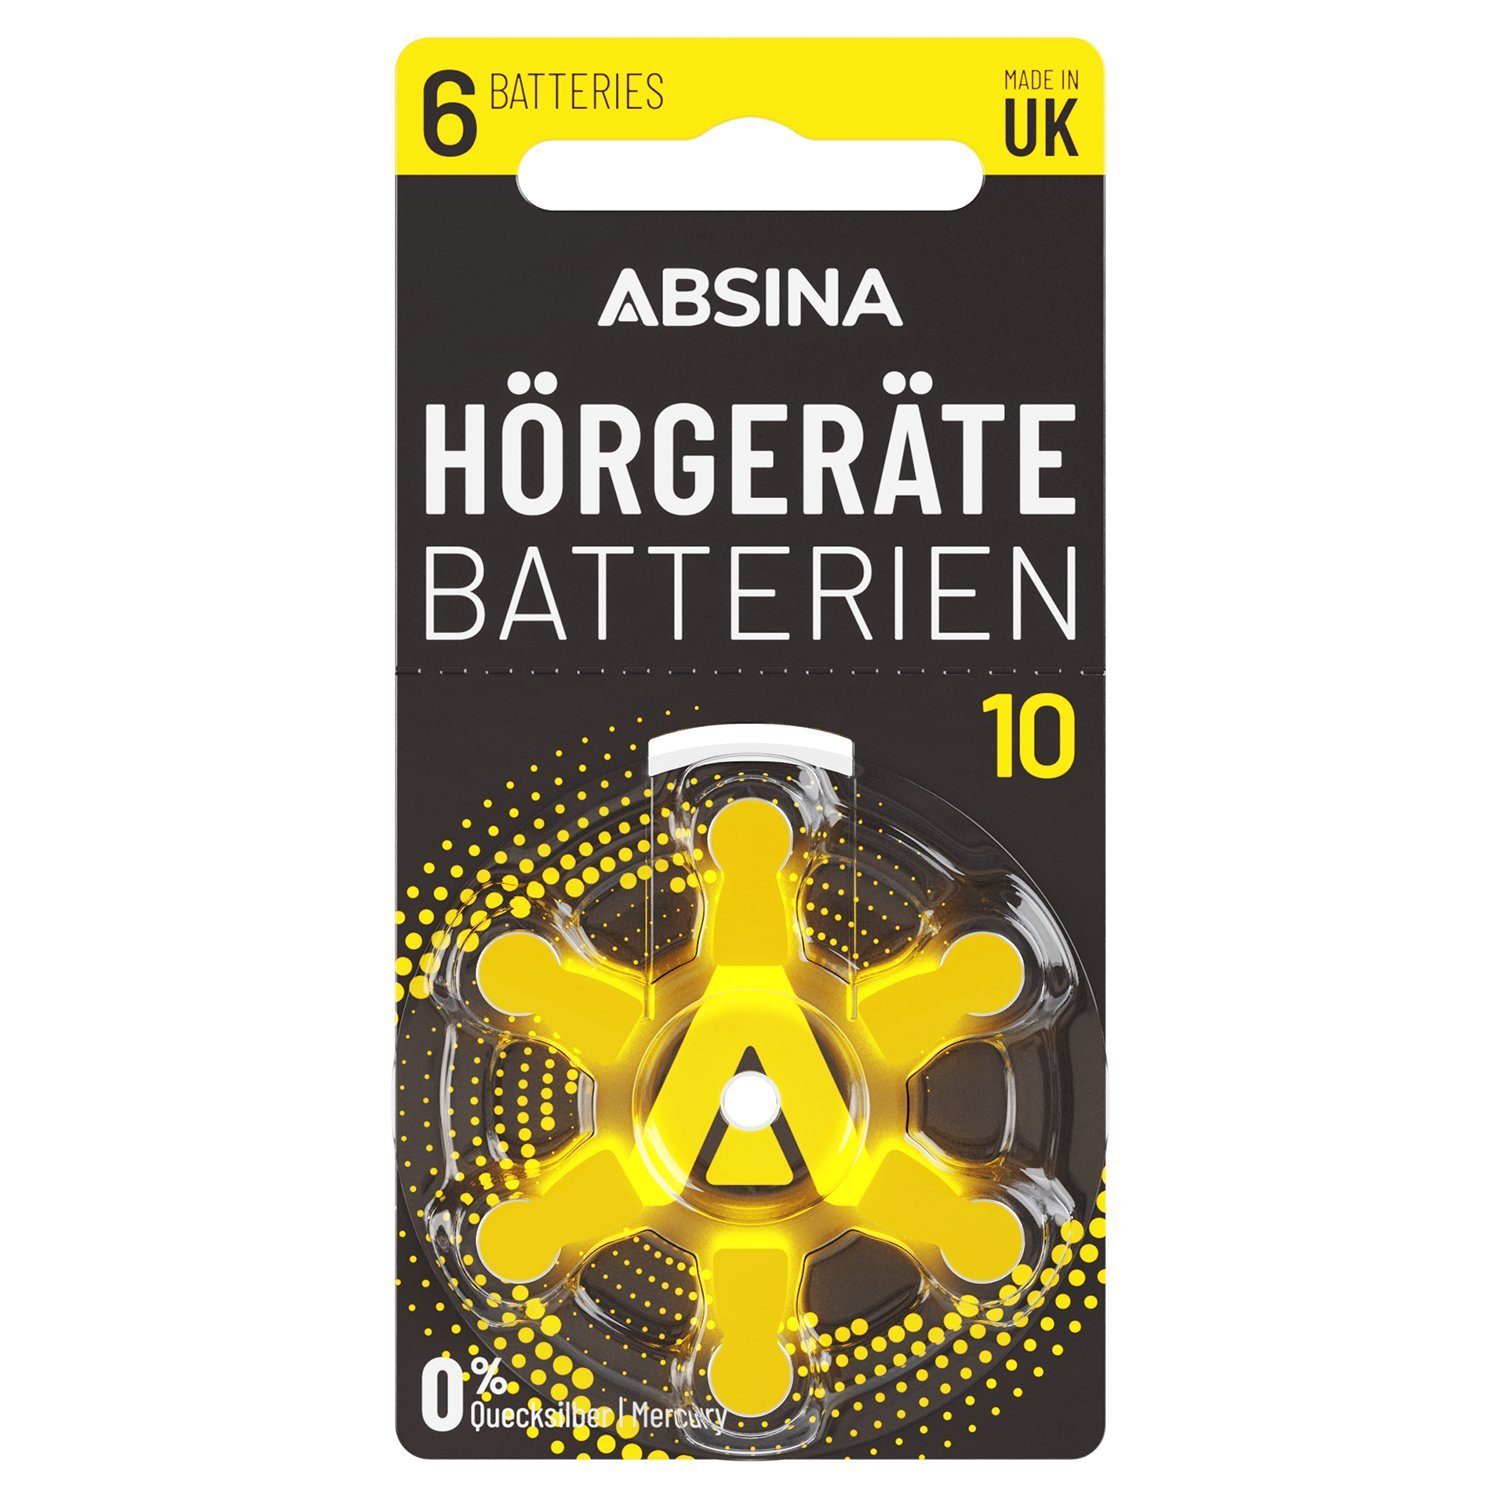 ABSINA 6x Hörgerätebatterien Typ 10 - Hörgeräte Batterien gelb Typ PR70 ZL4 Knopfzelle, (1 St)